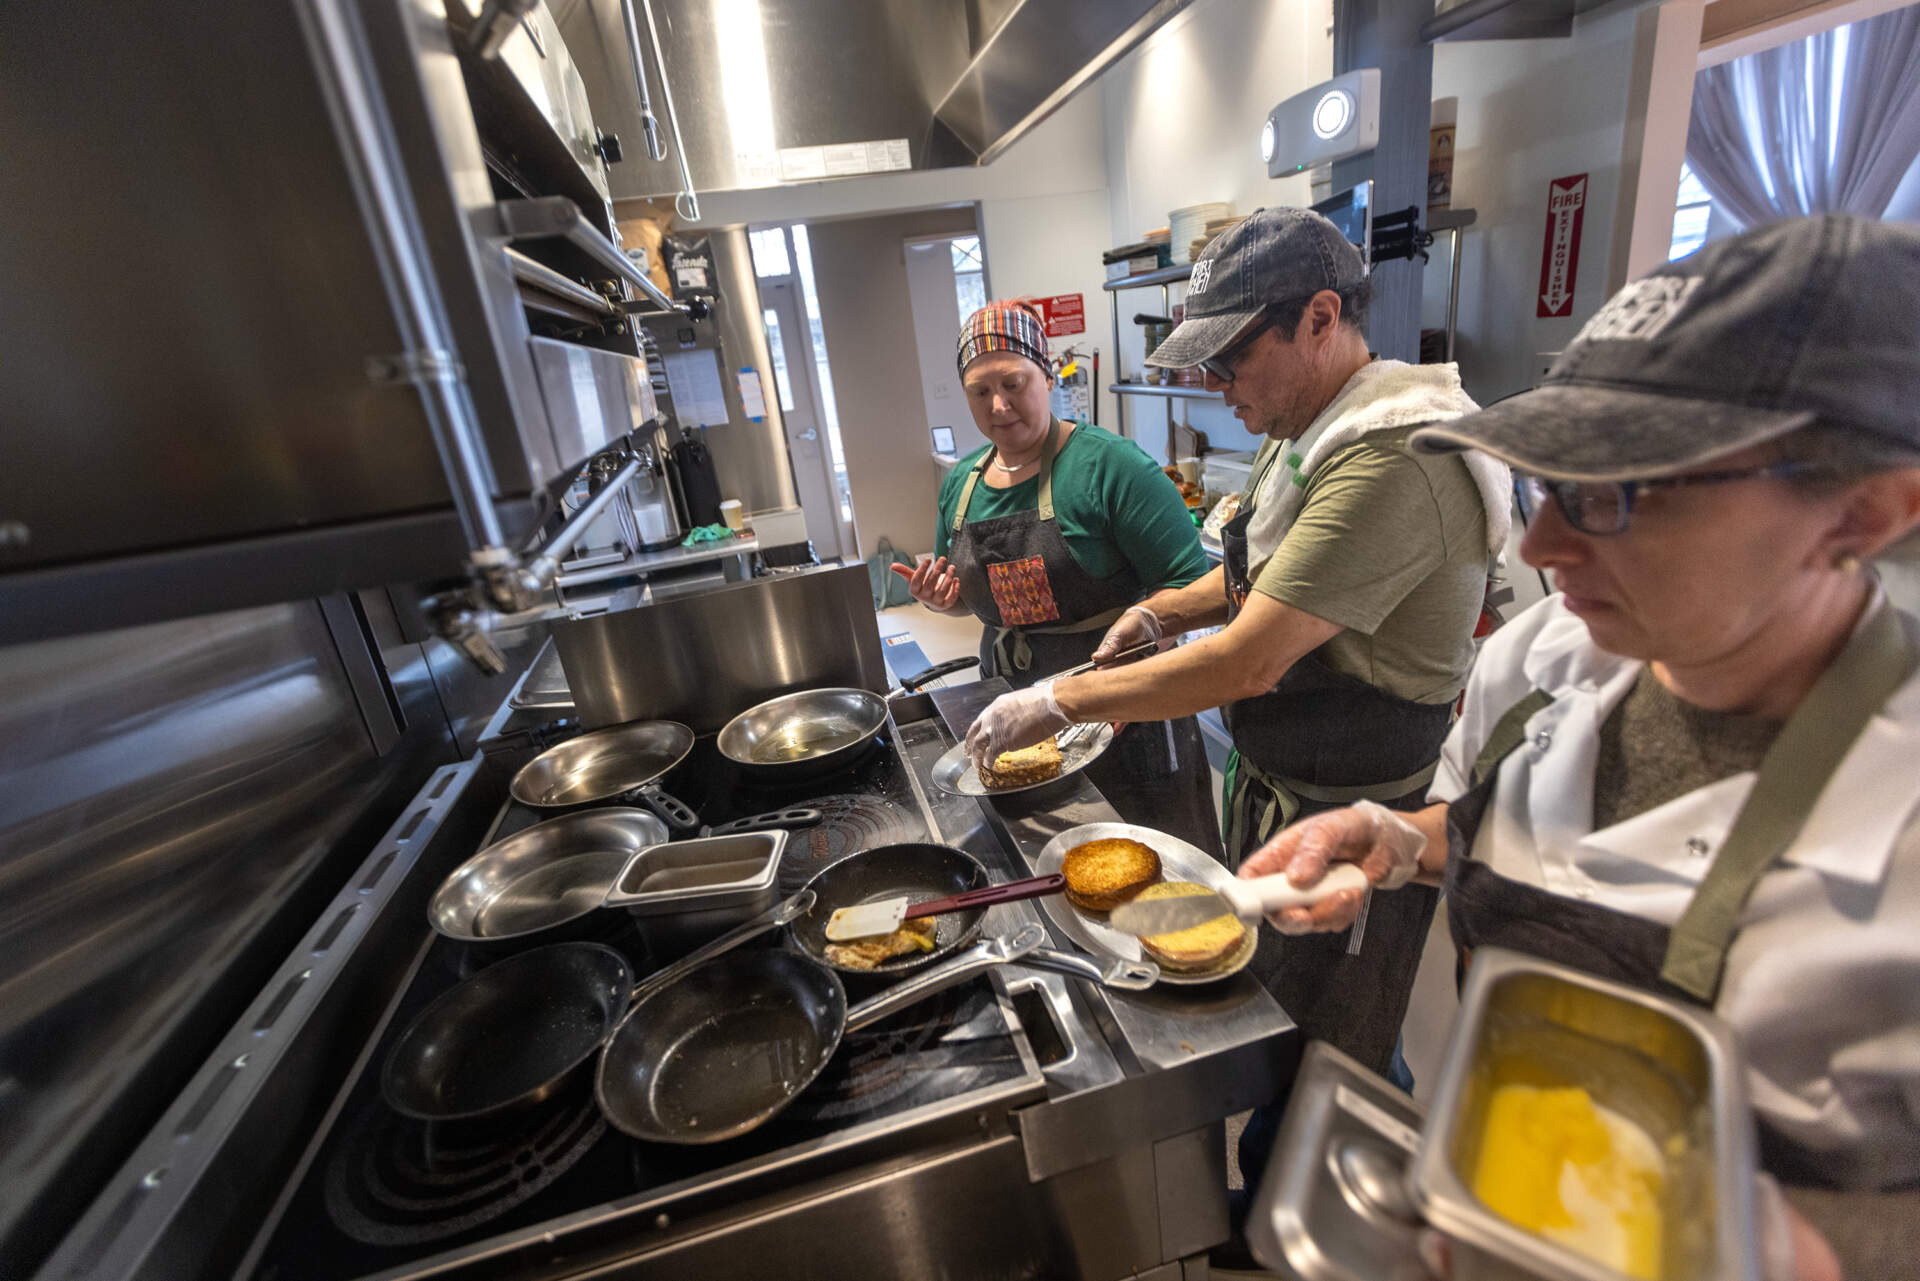 Chef Shelley Nason, left, guides the kitchen staff at Comfort Kitchen as they prepare breakfast sandwiches. (Jesse Costa/WBUR)